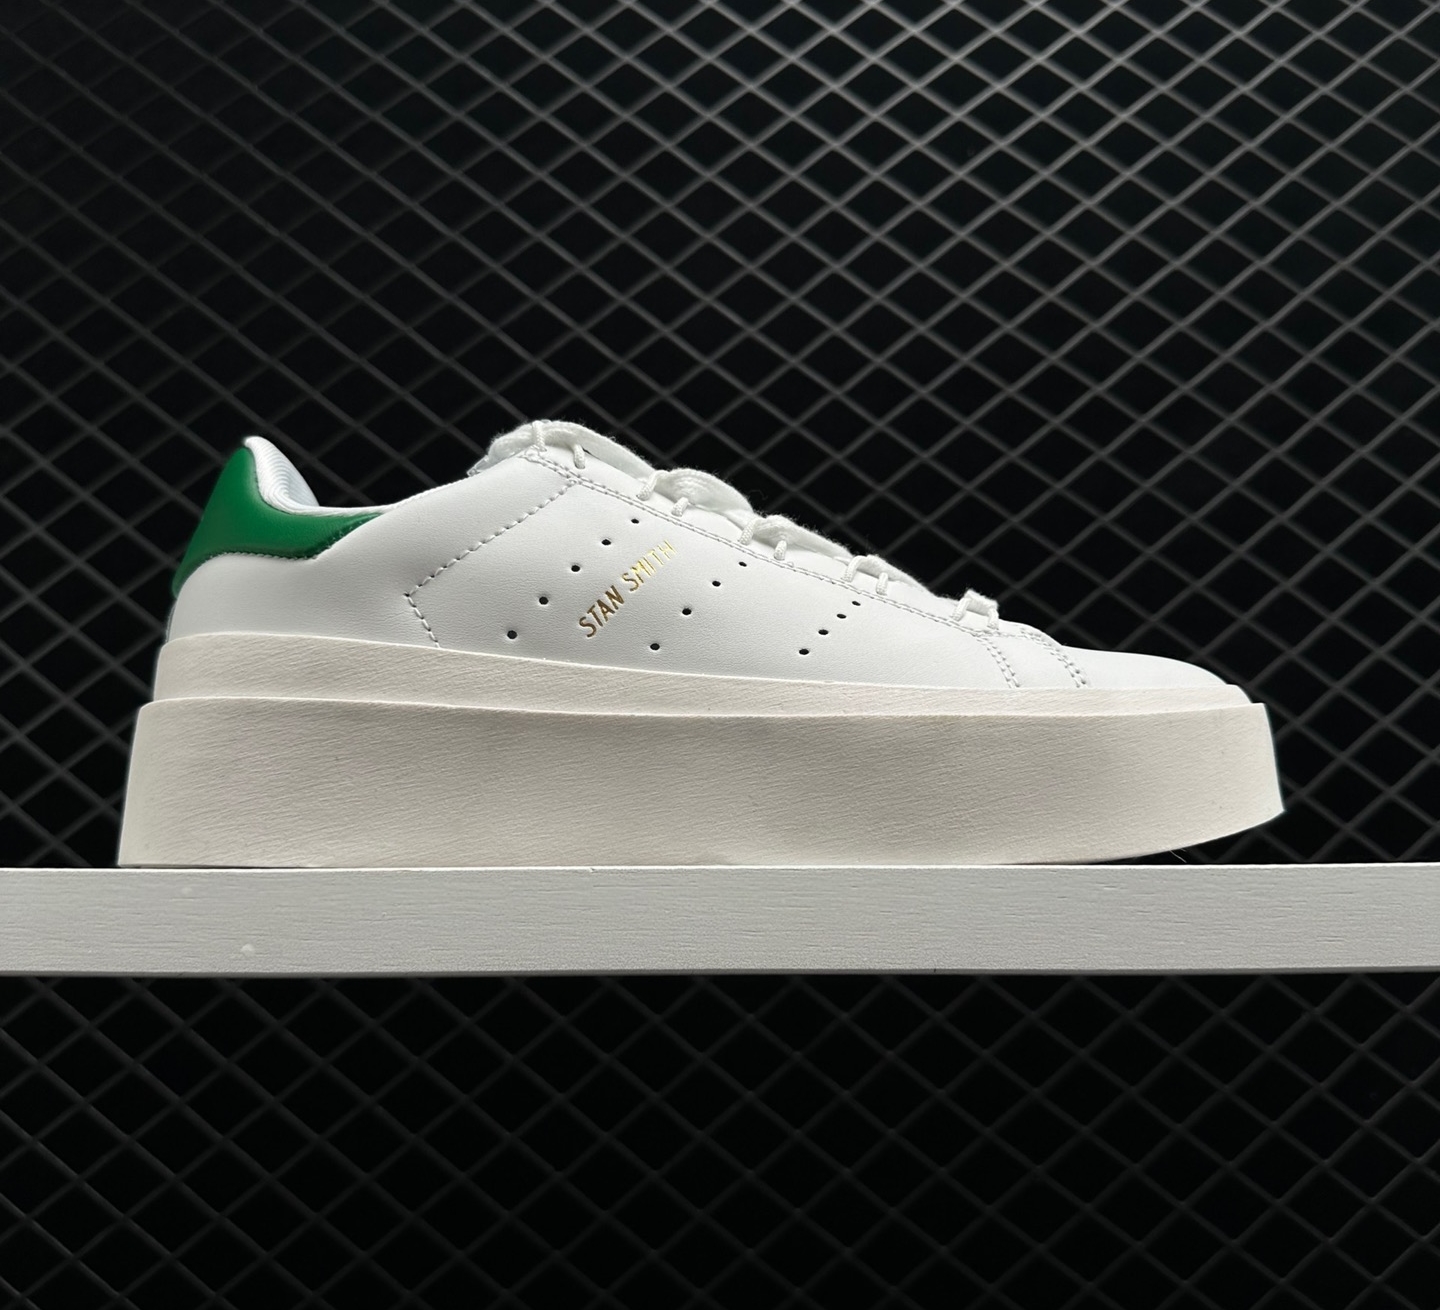 Adidas Stan Smith Bonega White Green GY9310 - Classic Style with a Fresh Twist